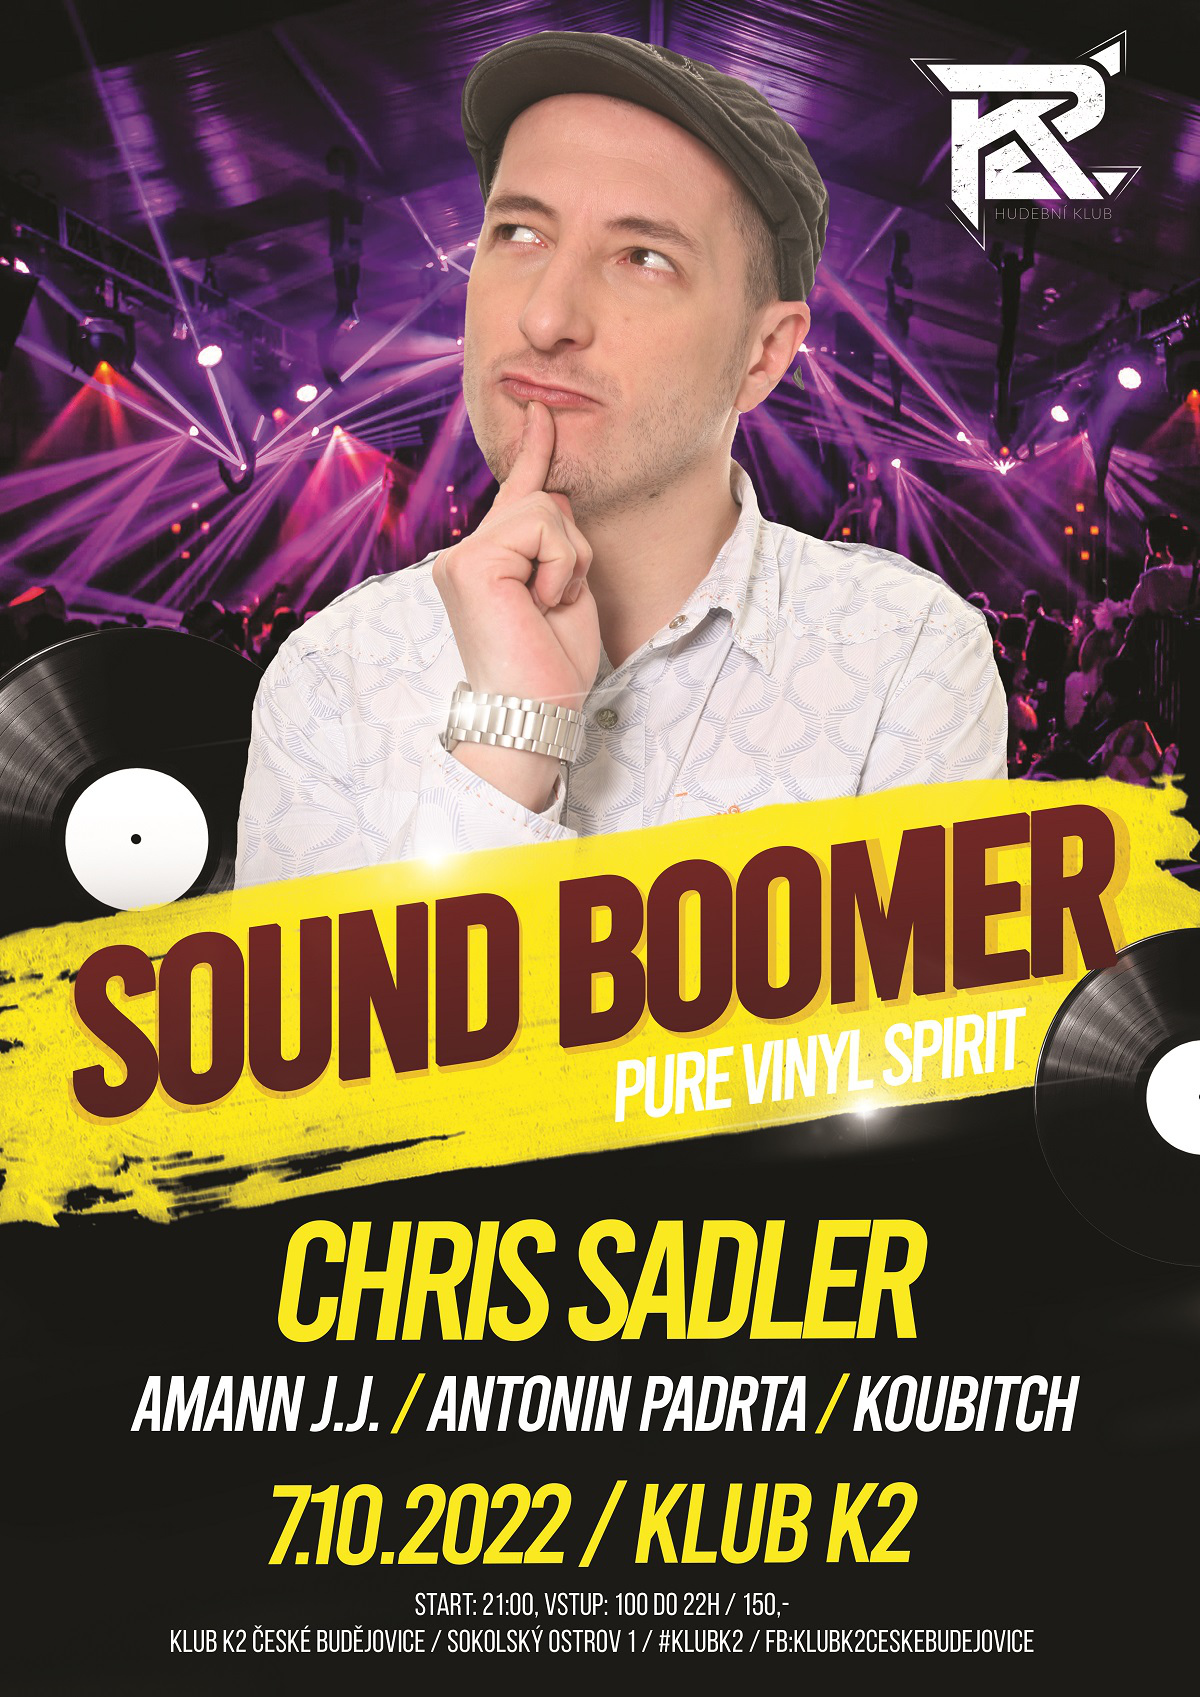 Sound Boomer w. Chris Sadler / Pure vinyl / Aman JJ b-day